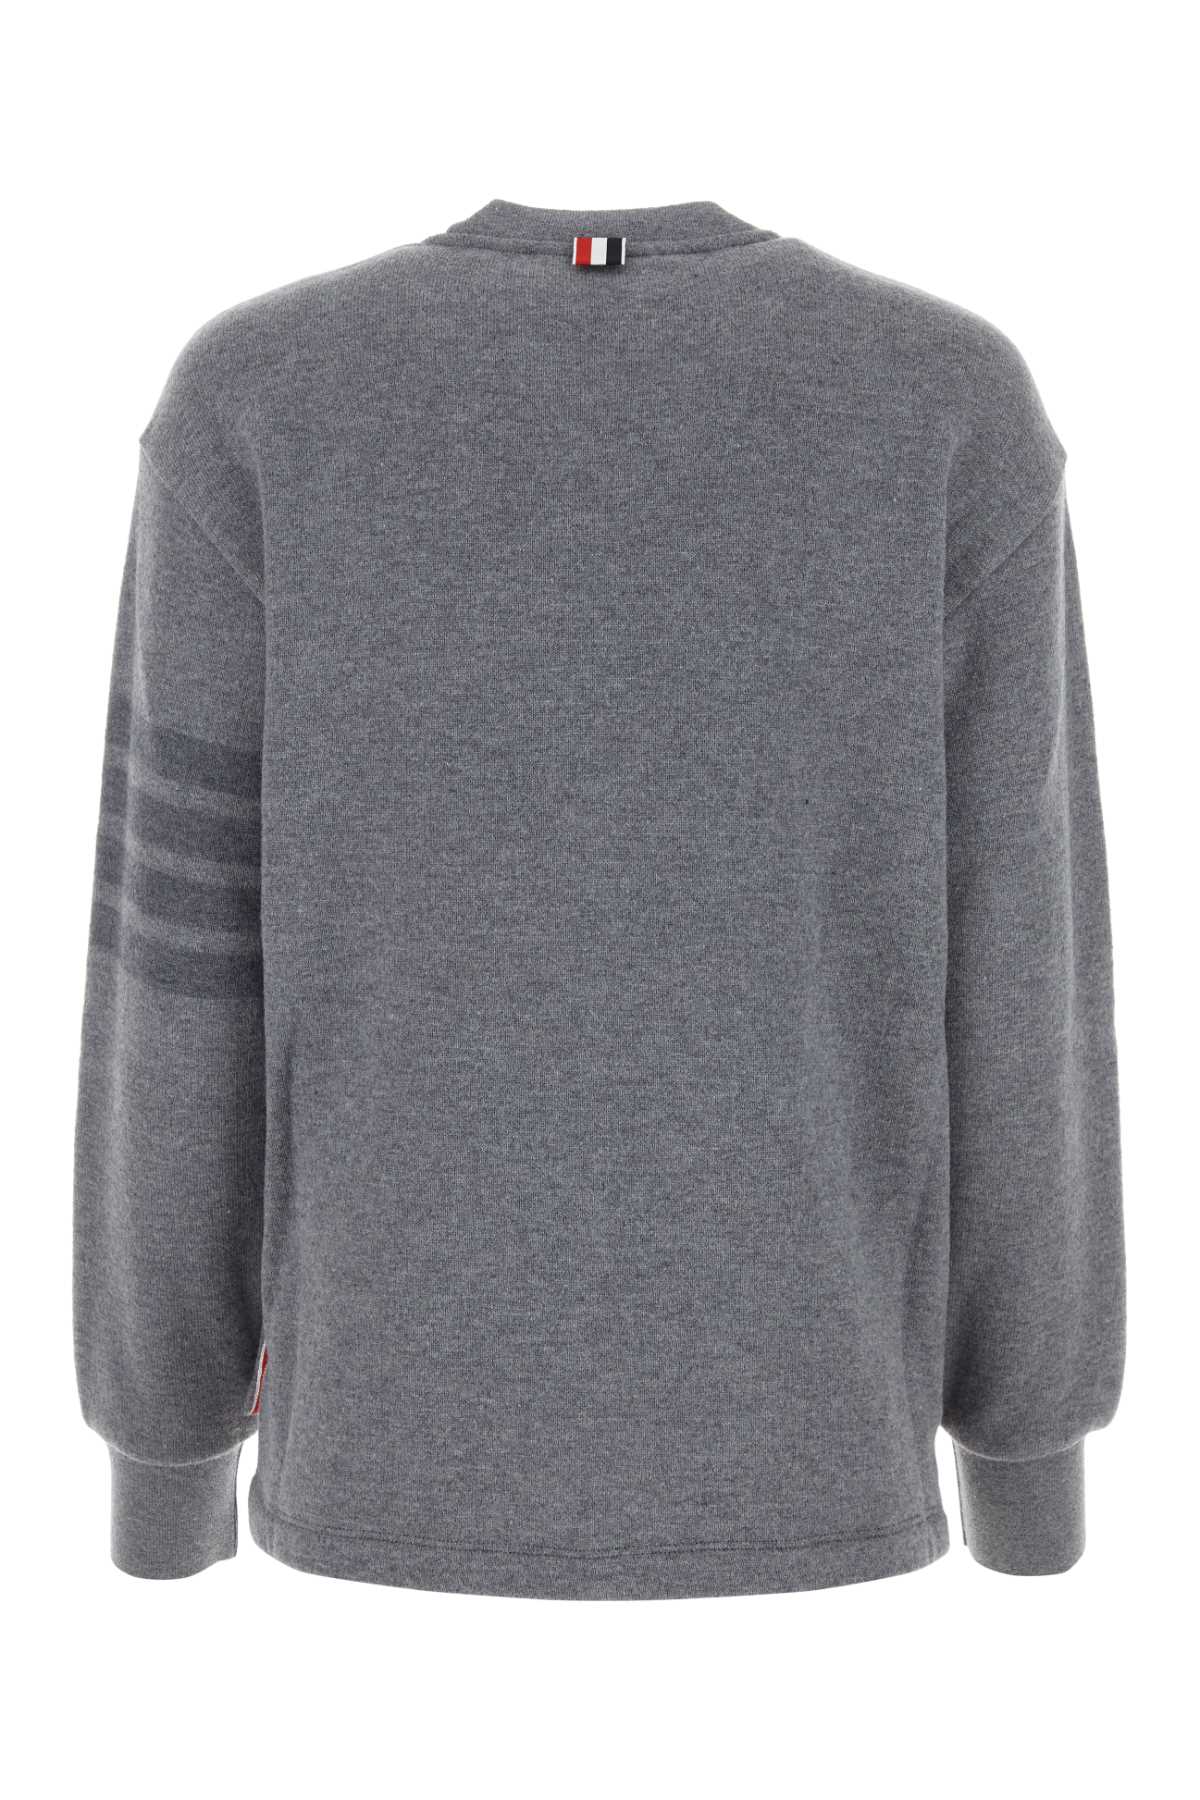 Thom Browne Grey Wool Sweatshirt In Ltgrey